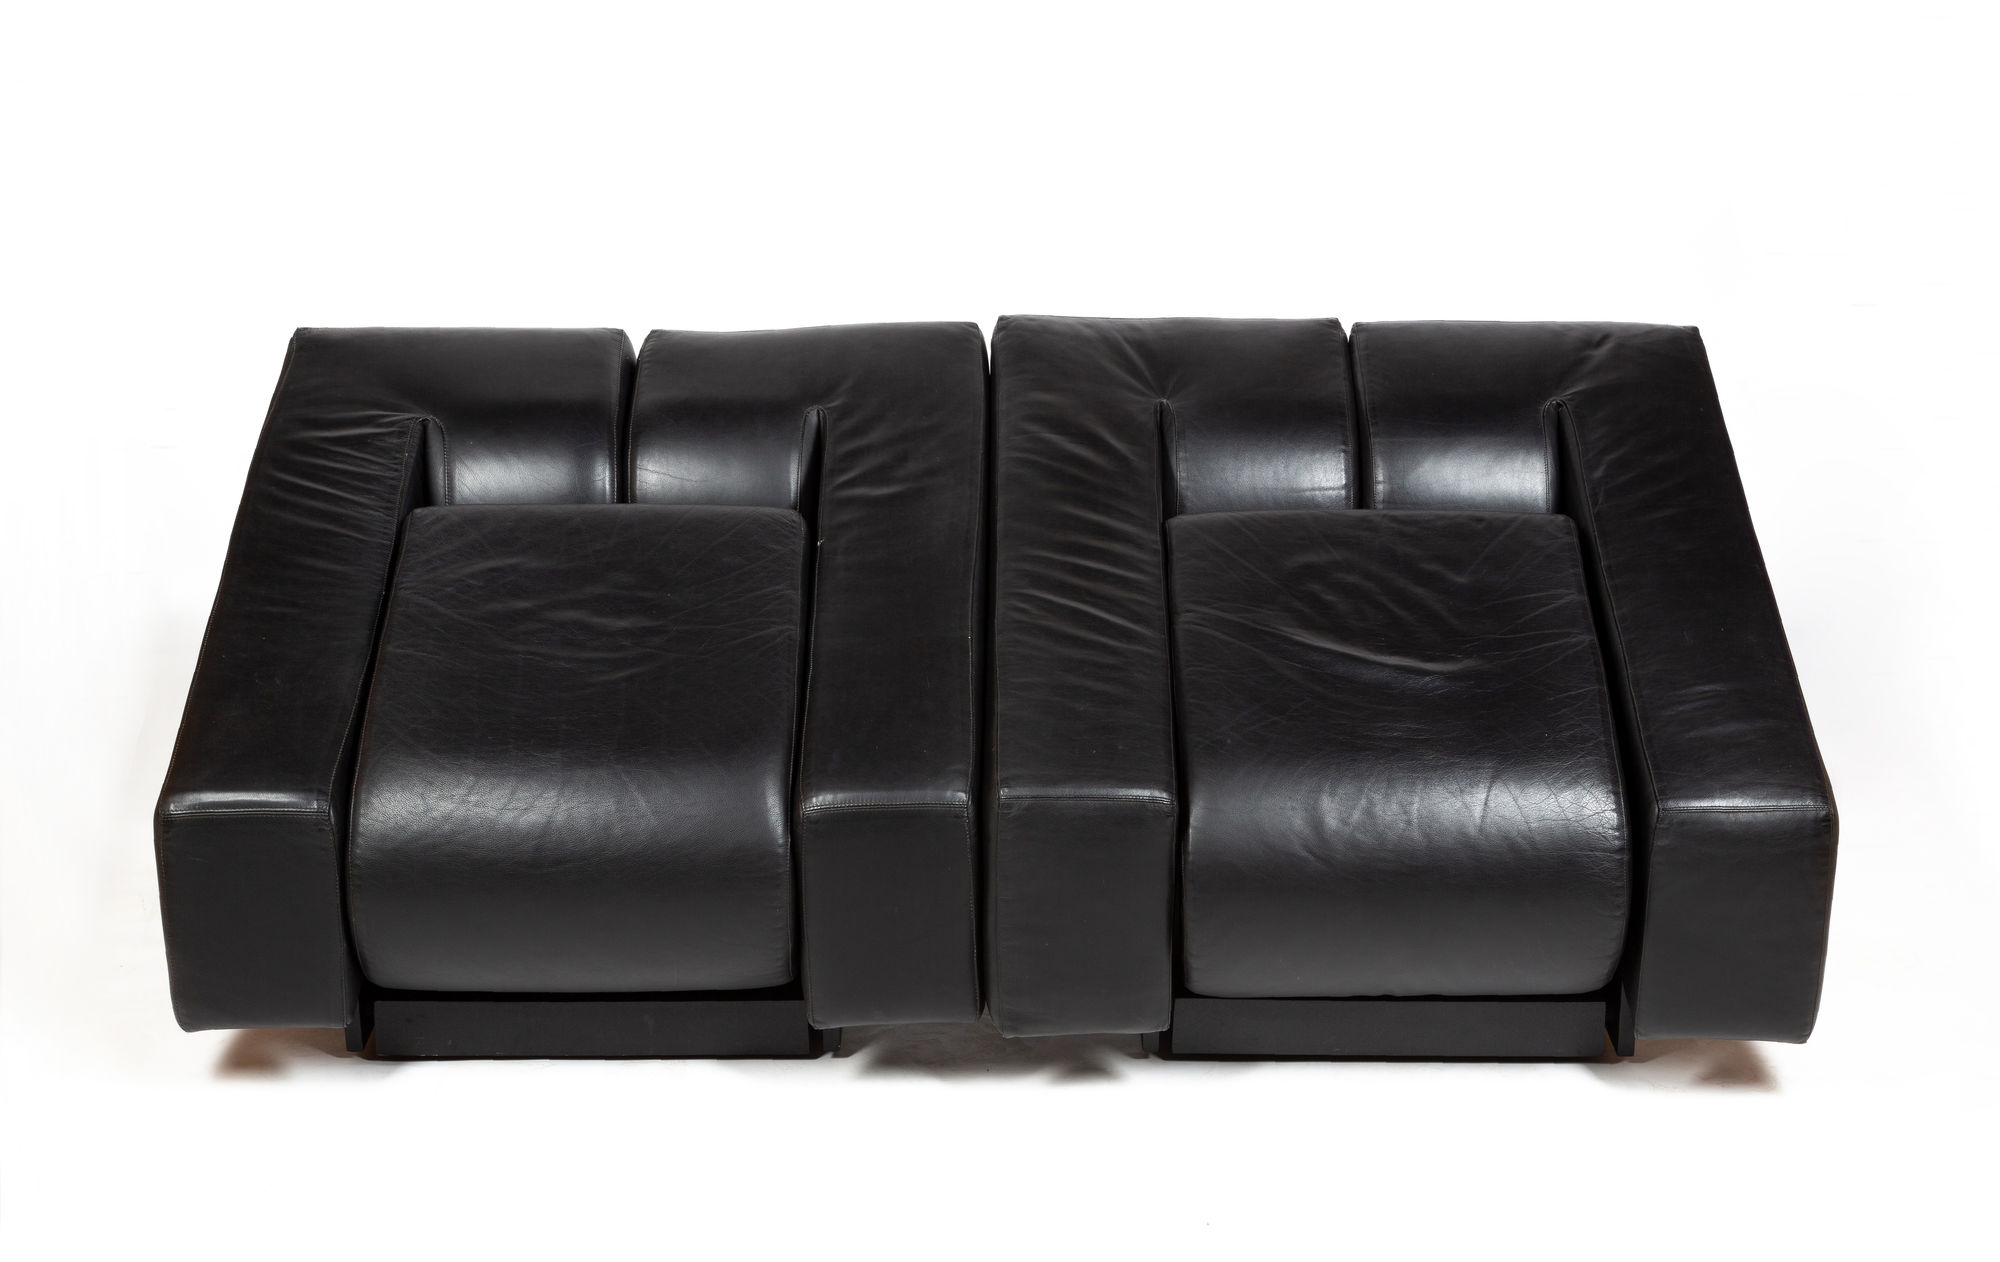 Mario Botta Obliqua armchair